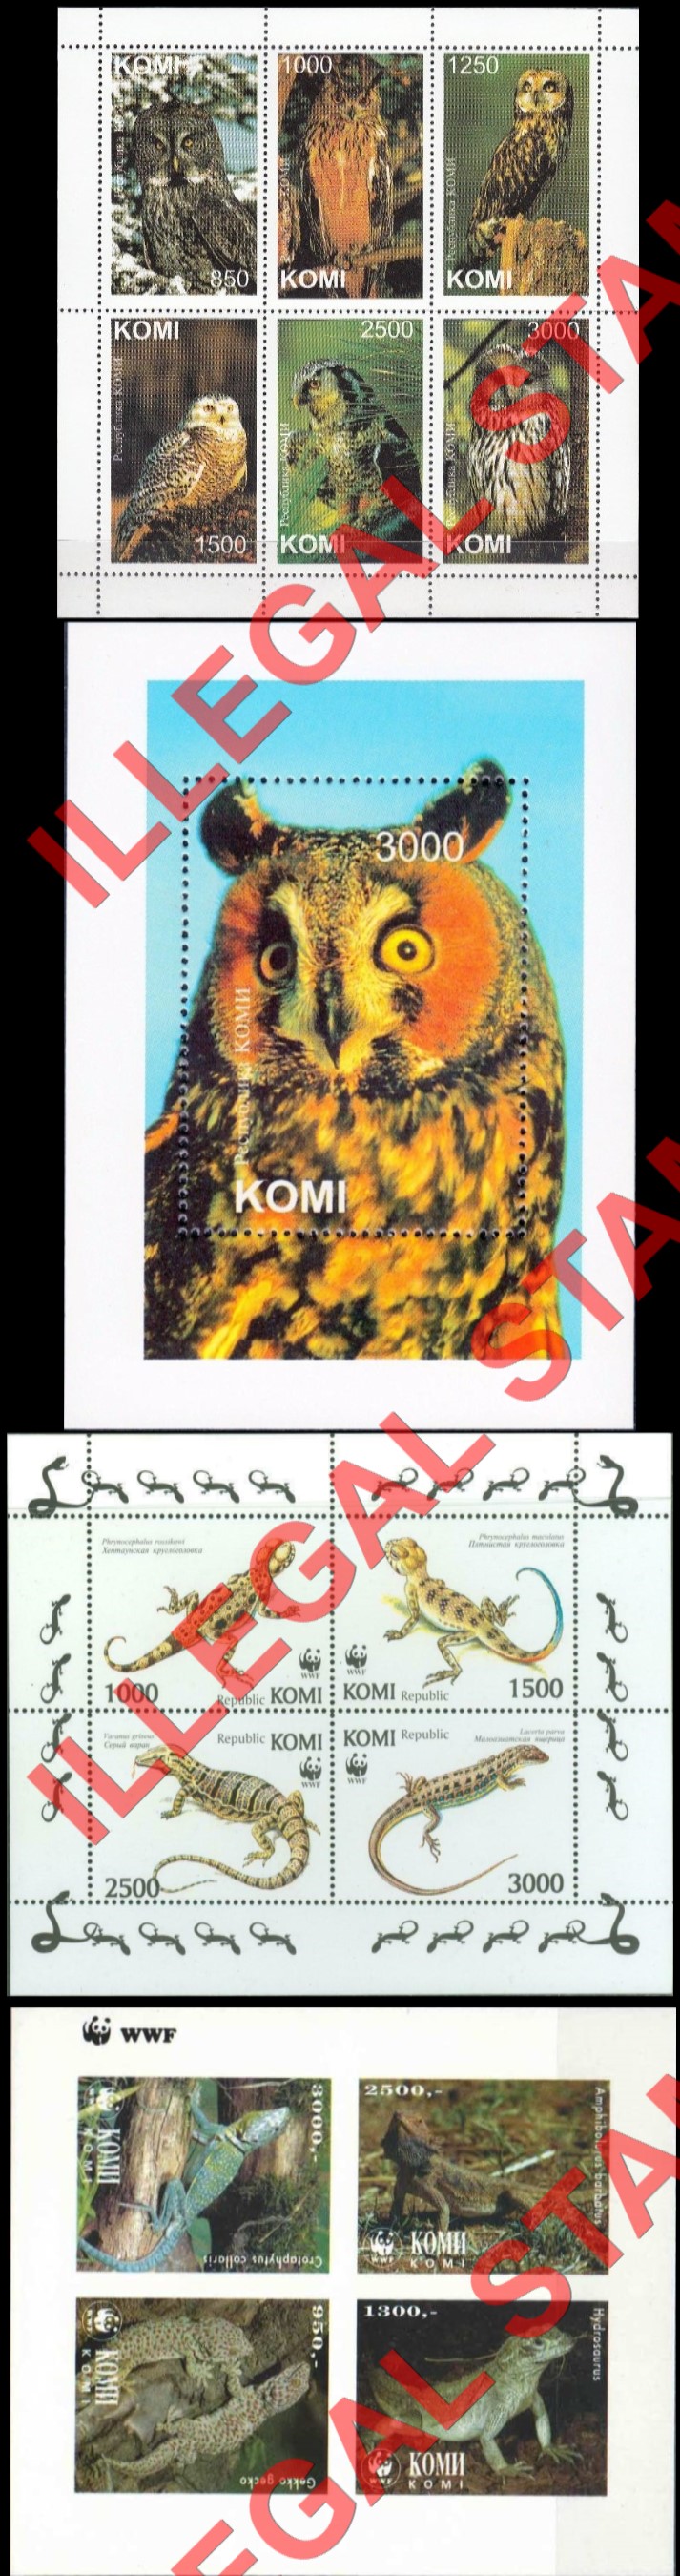 Komi Republic 1997 Counterfeit Illegal Stamps (Part 2)